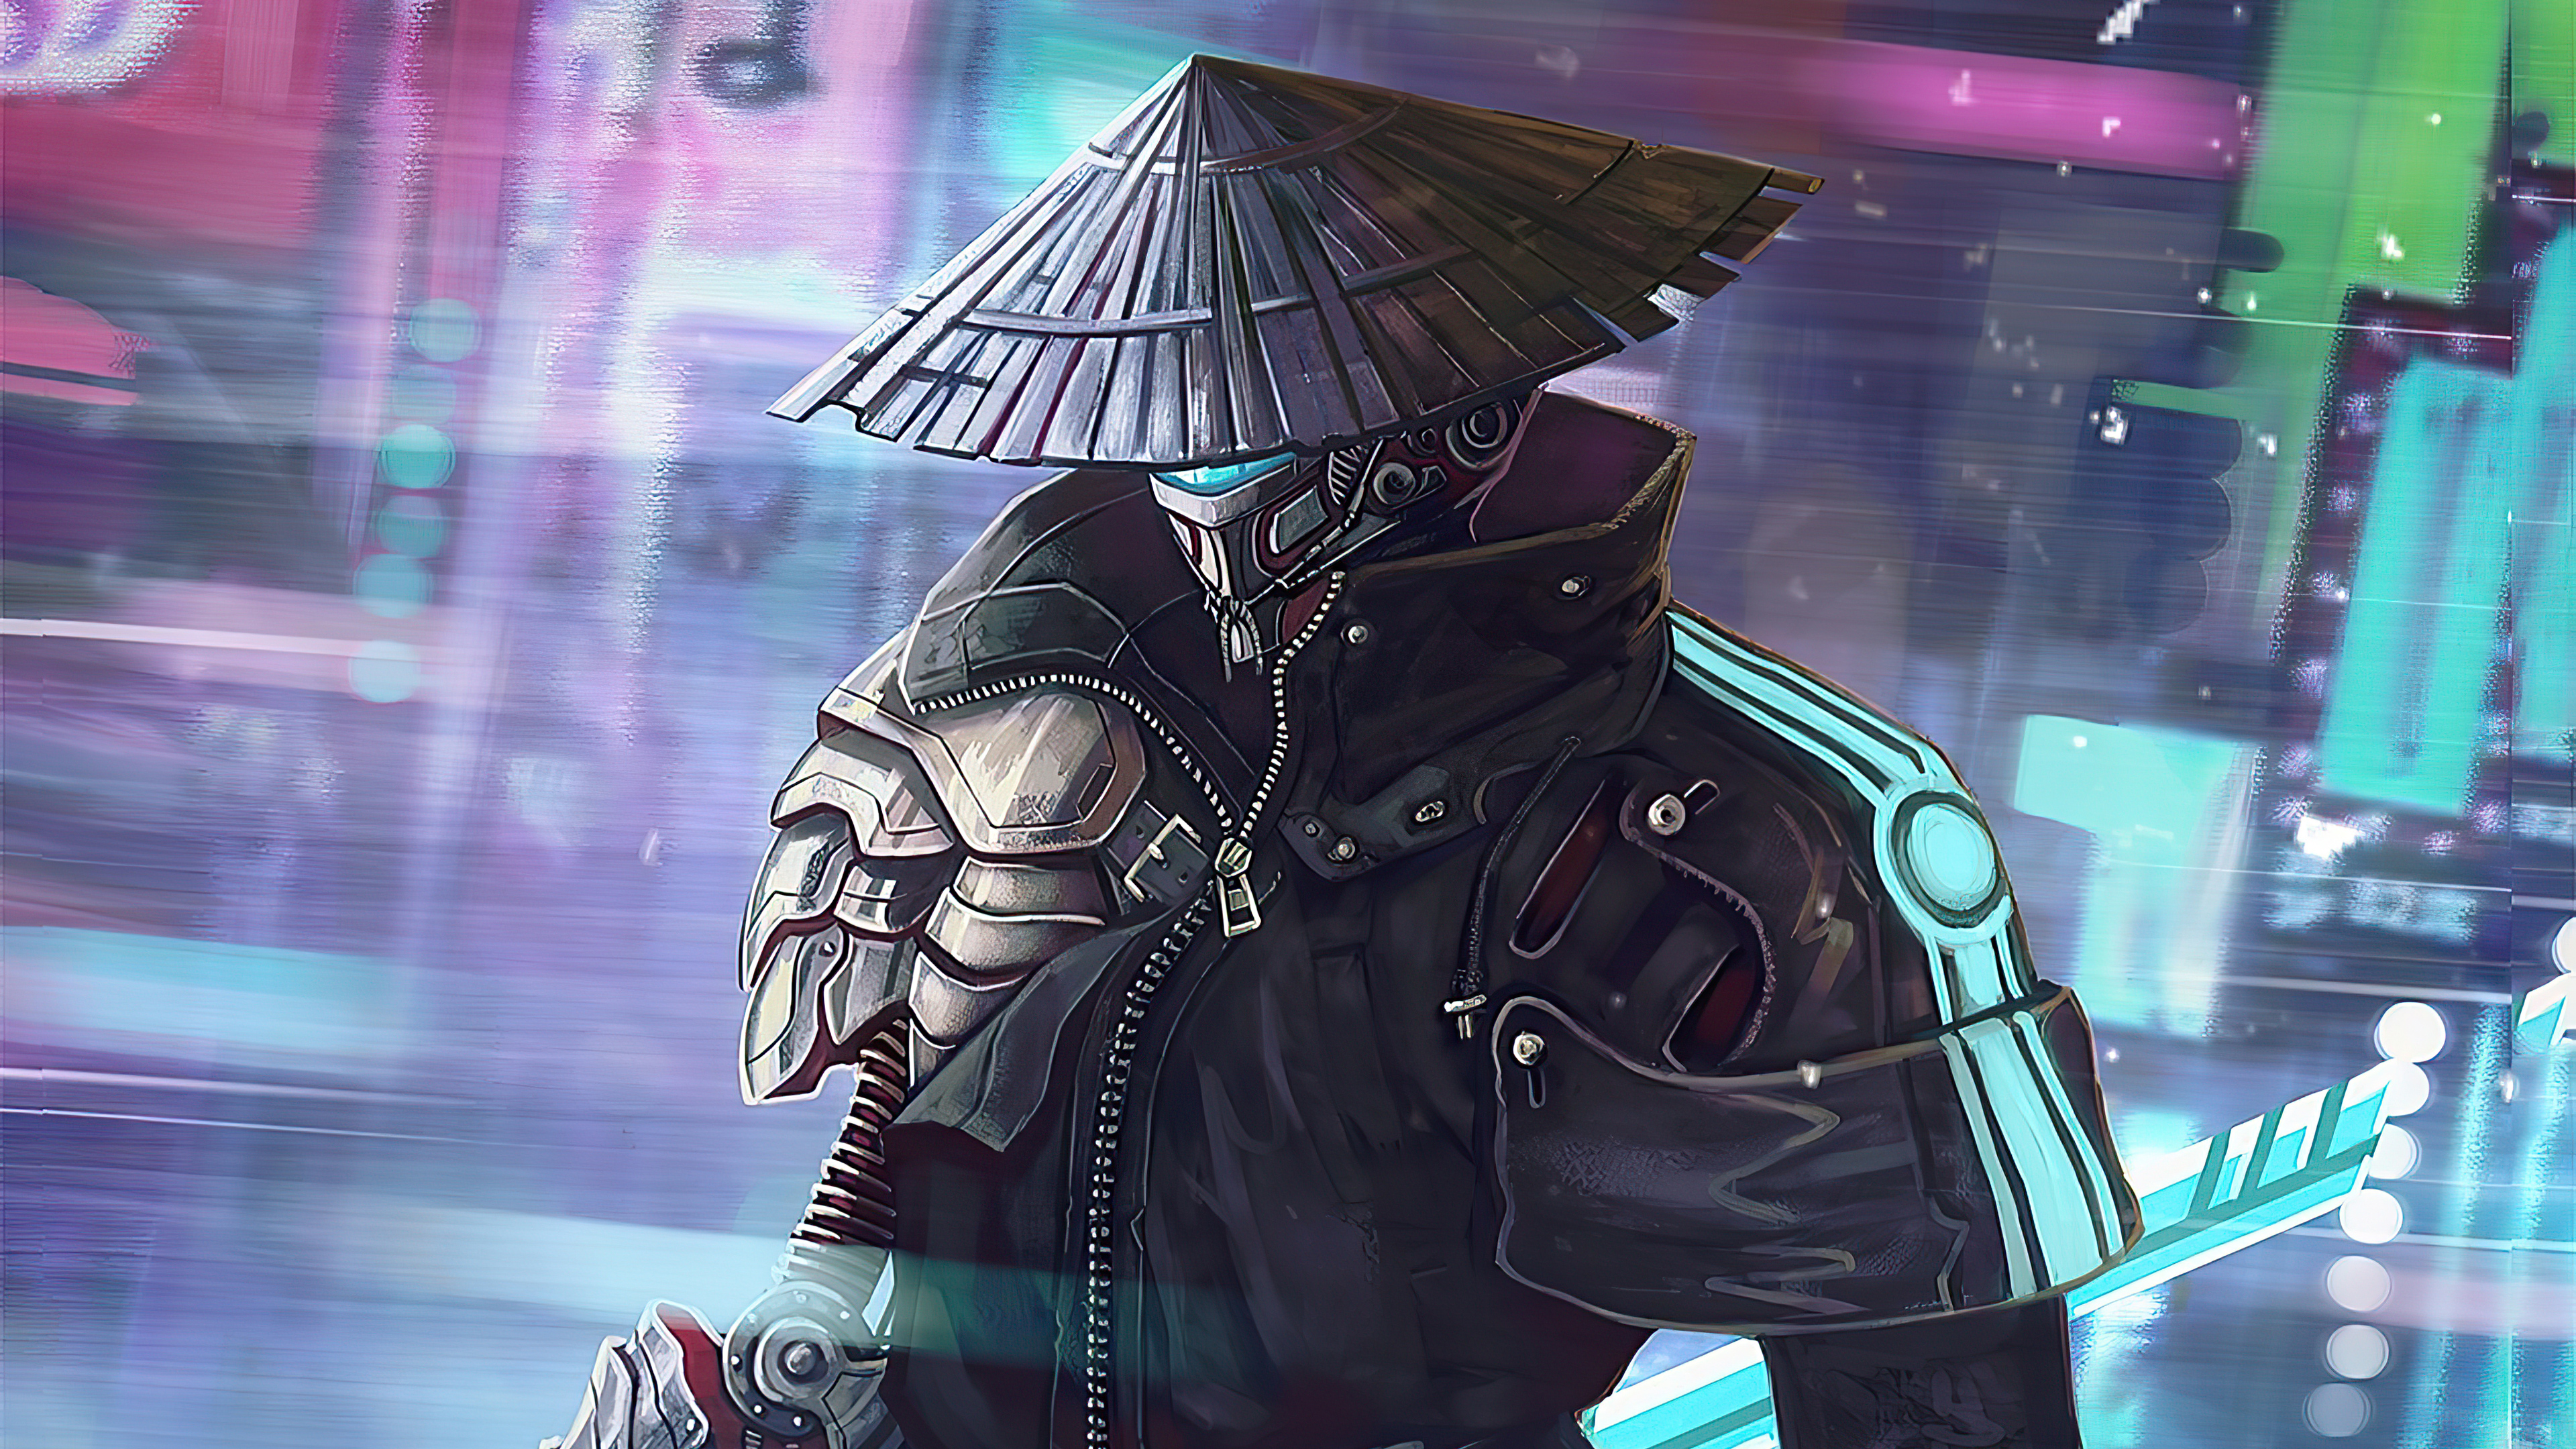 Download wallpaper 1125x2436 cyberpunk 2077, samurai jacket, game  character, iphone x, 1125x2436 hd background, 29045